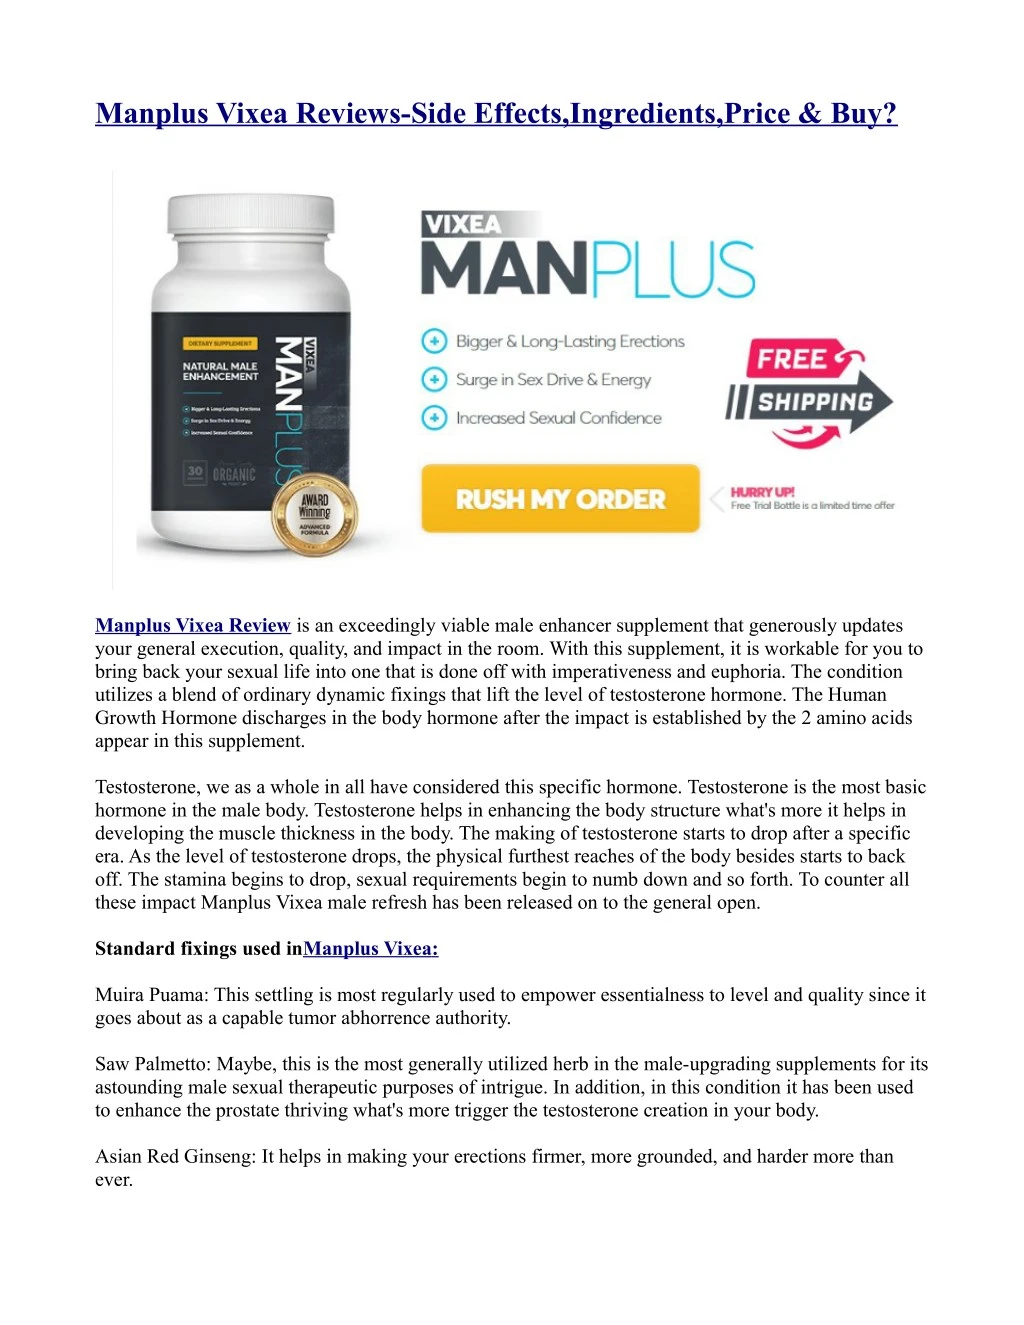 manplus vixea reviews side effects ingredients